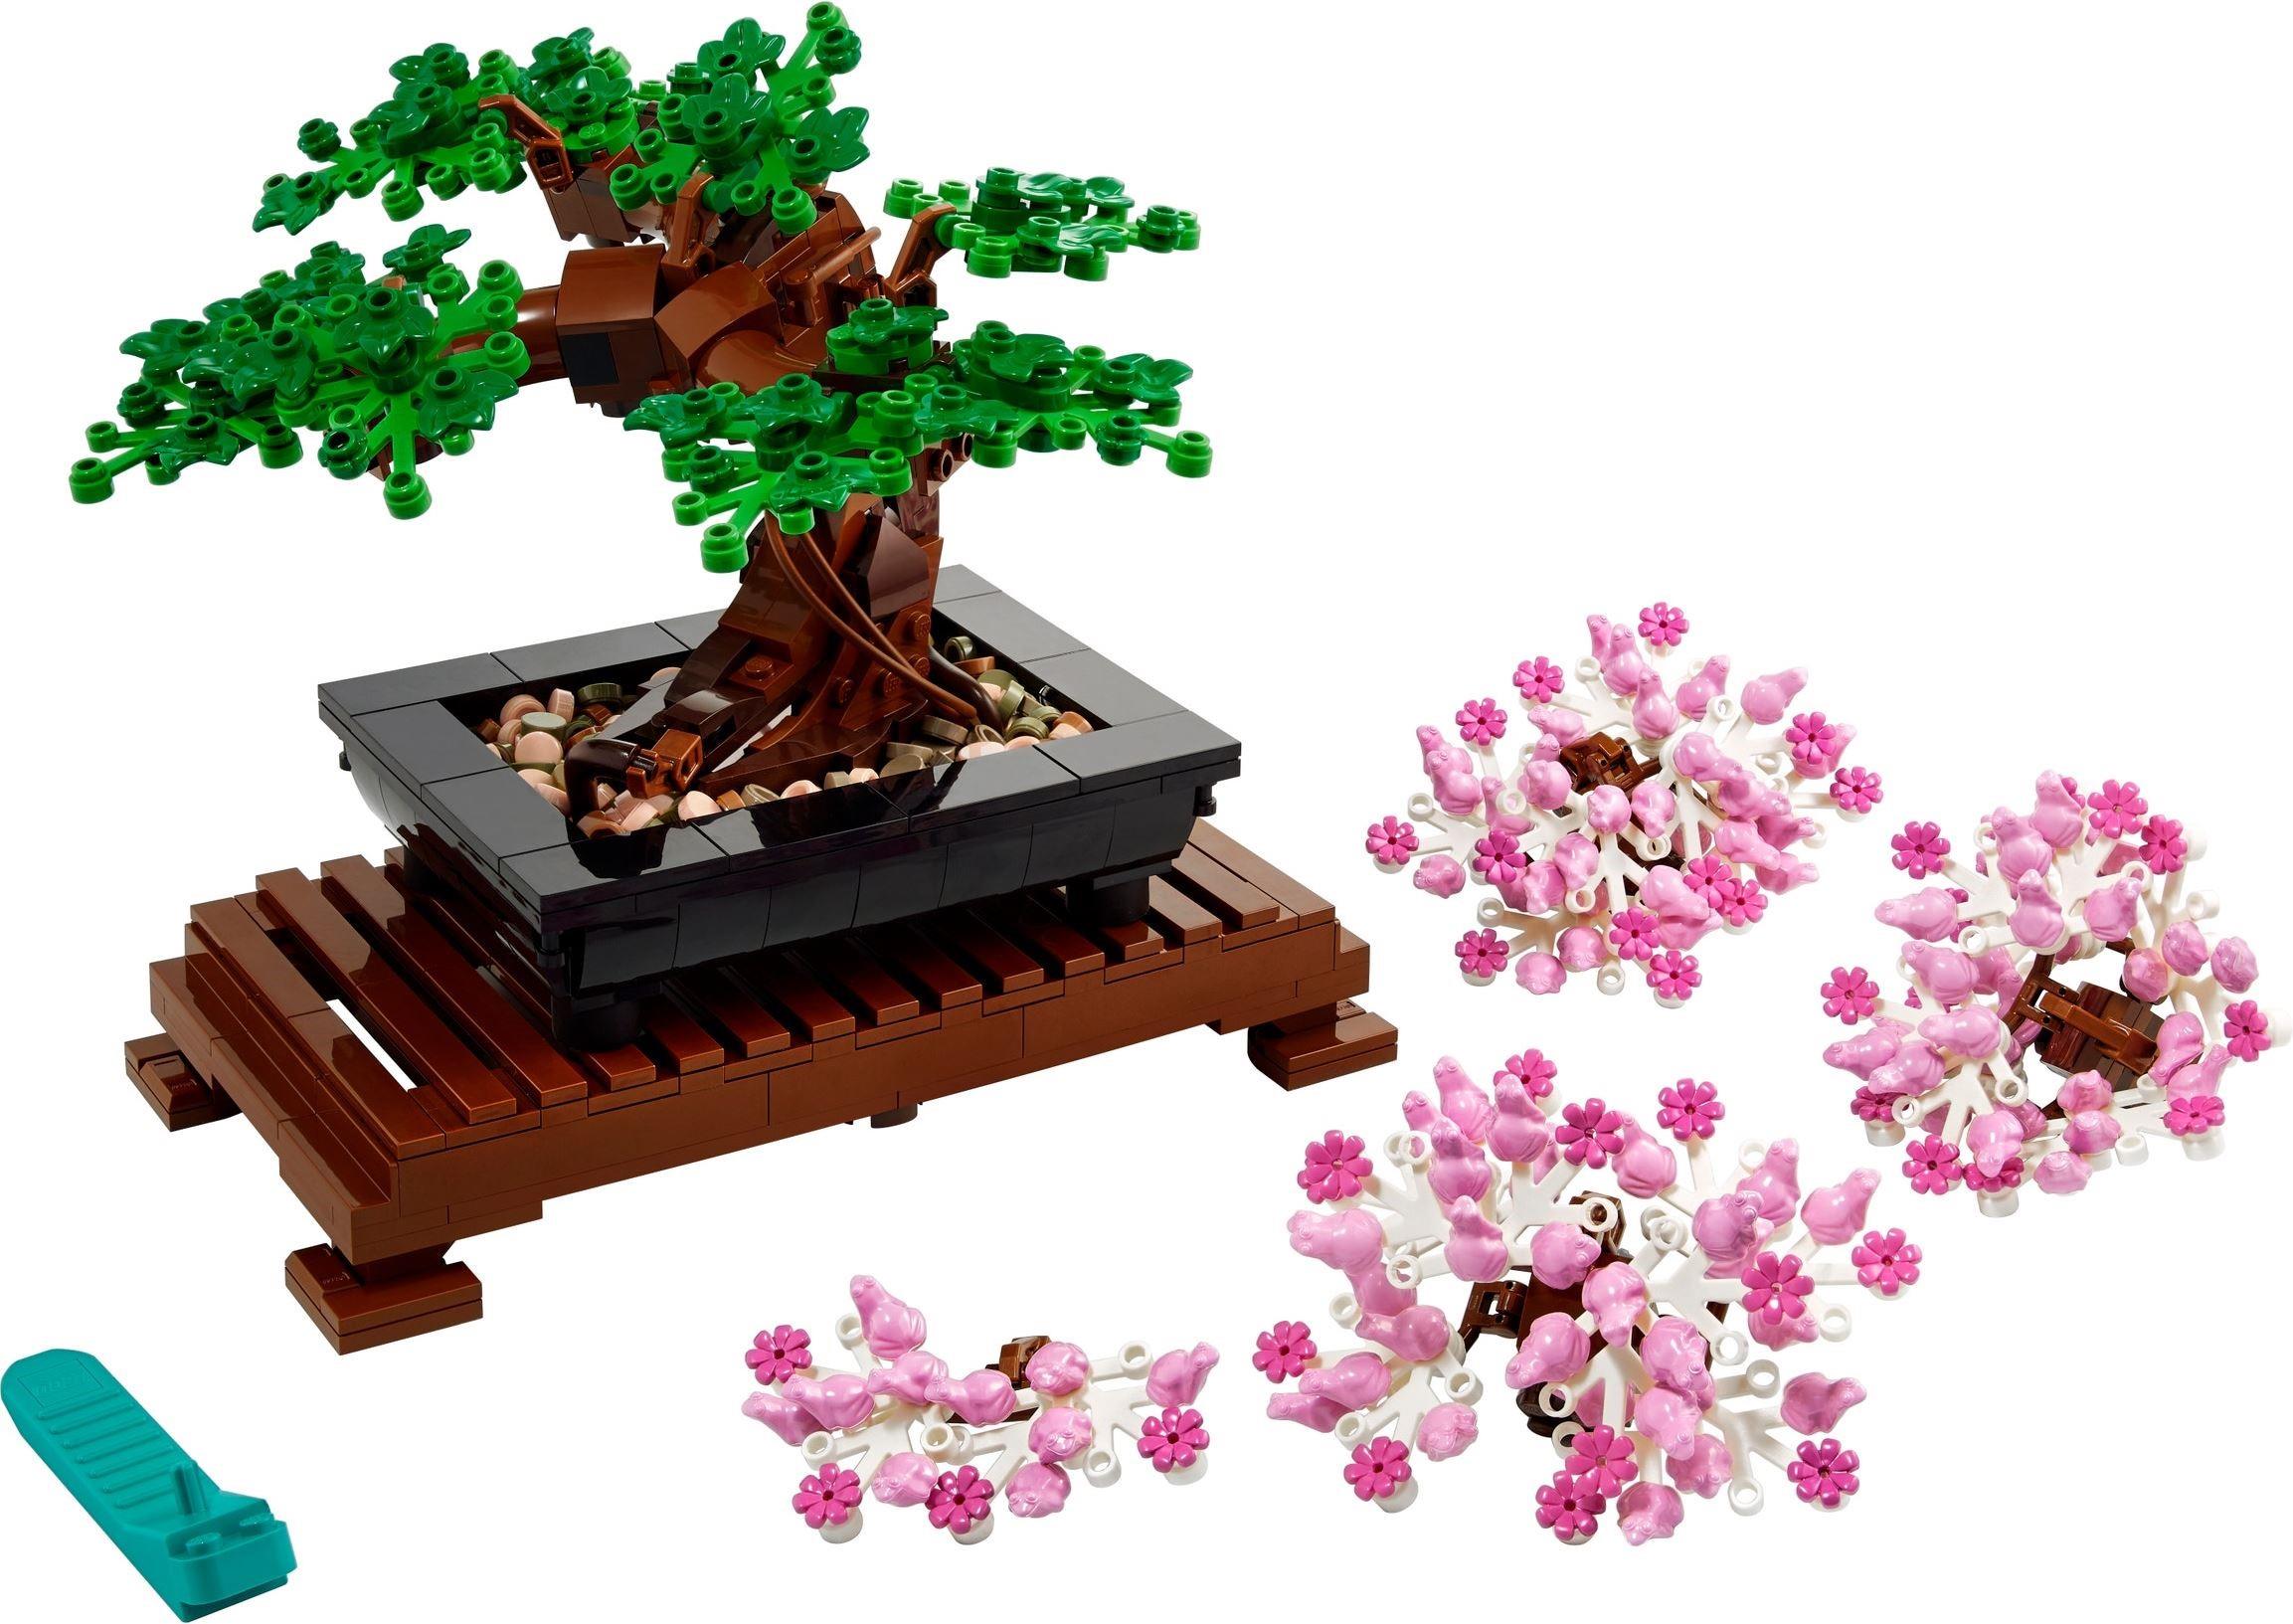 LEGO Bonsai Tree 10281 (878 Pieces) - Sealed Box